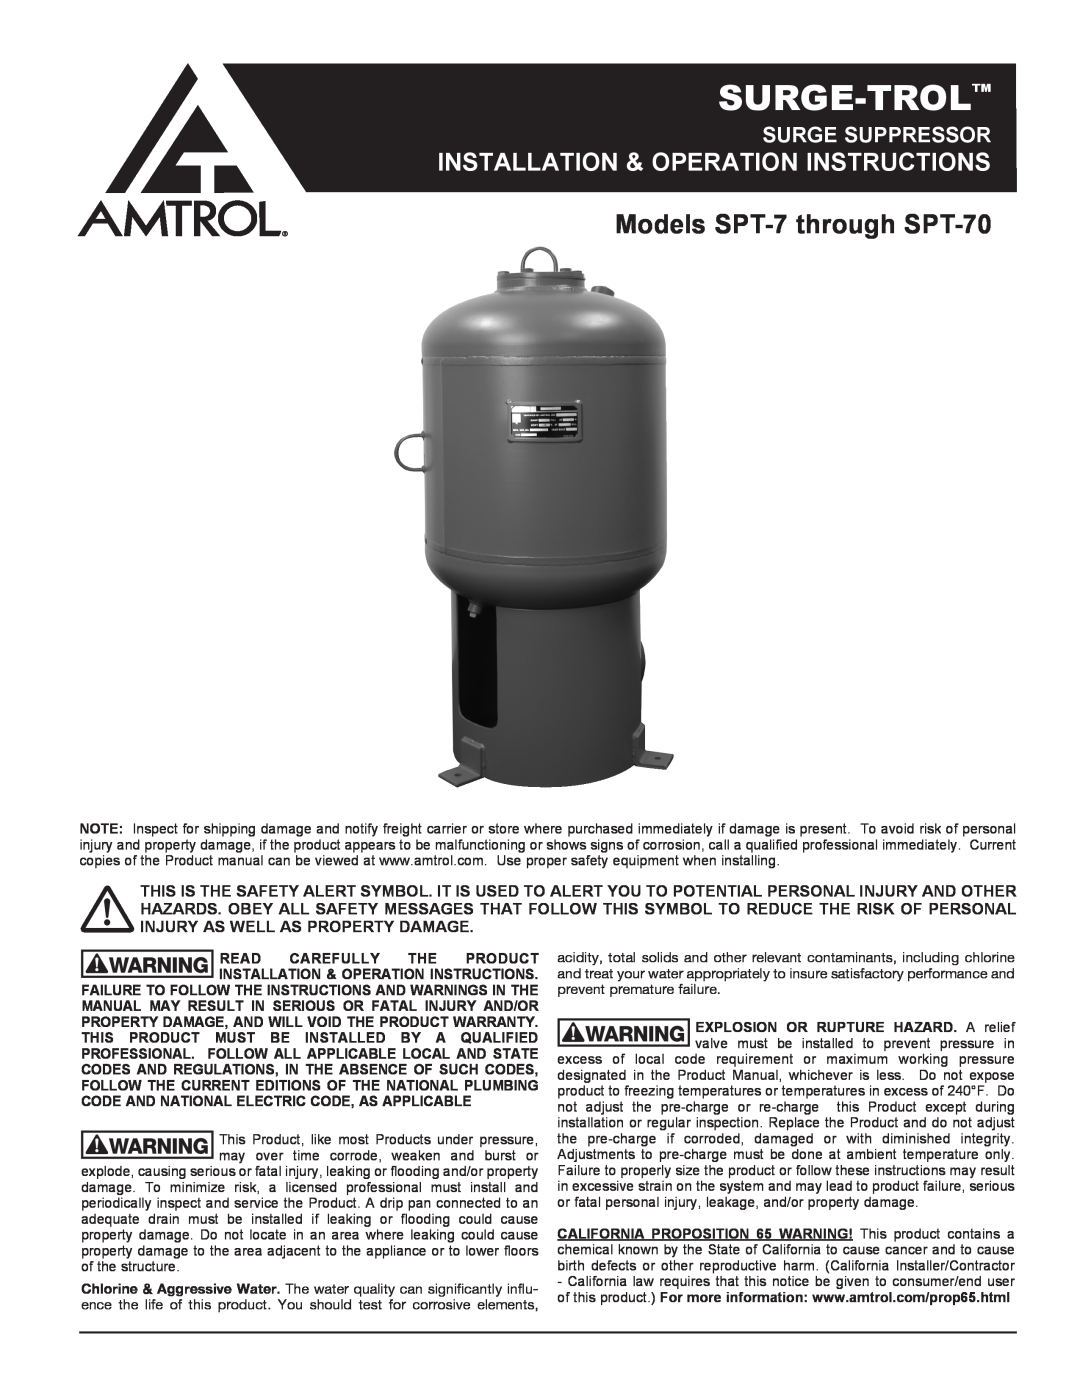 Amtrol warranty Surge-Trol, Models SPT-7 through SPT-70, Installation & Operation Instructions, Surge Suppressor 